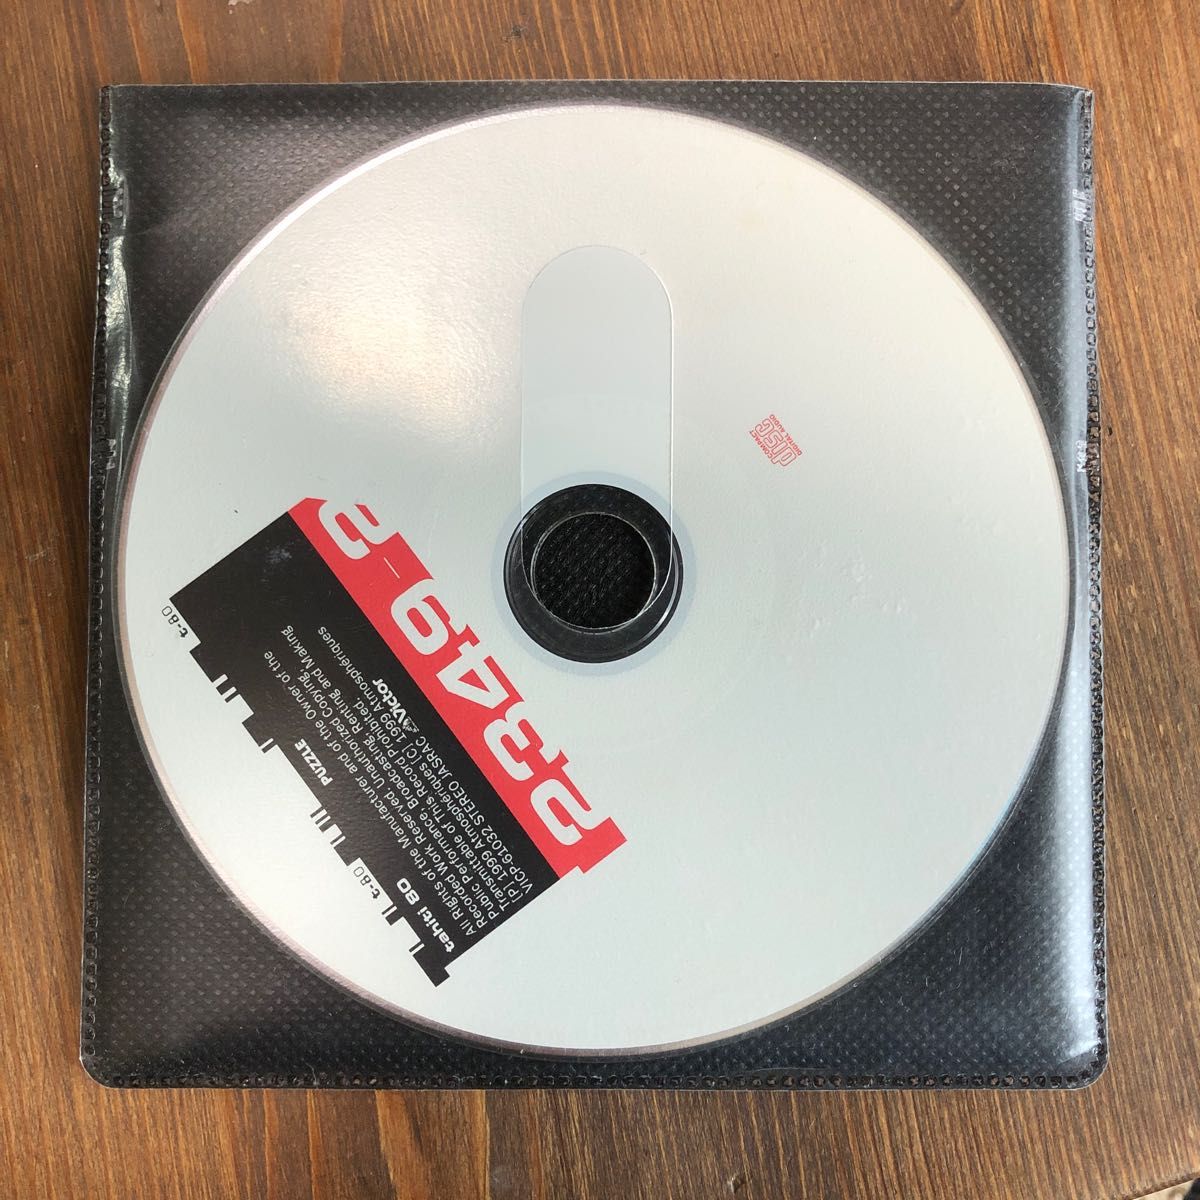 tahiti80 PUZZLE パズル中古CD